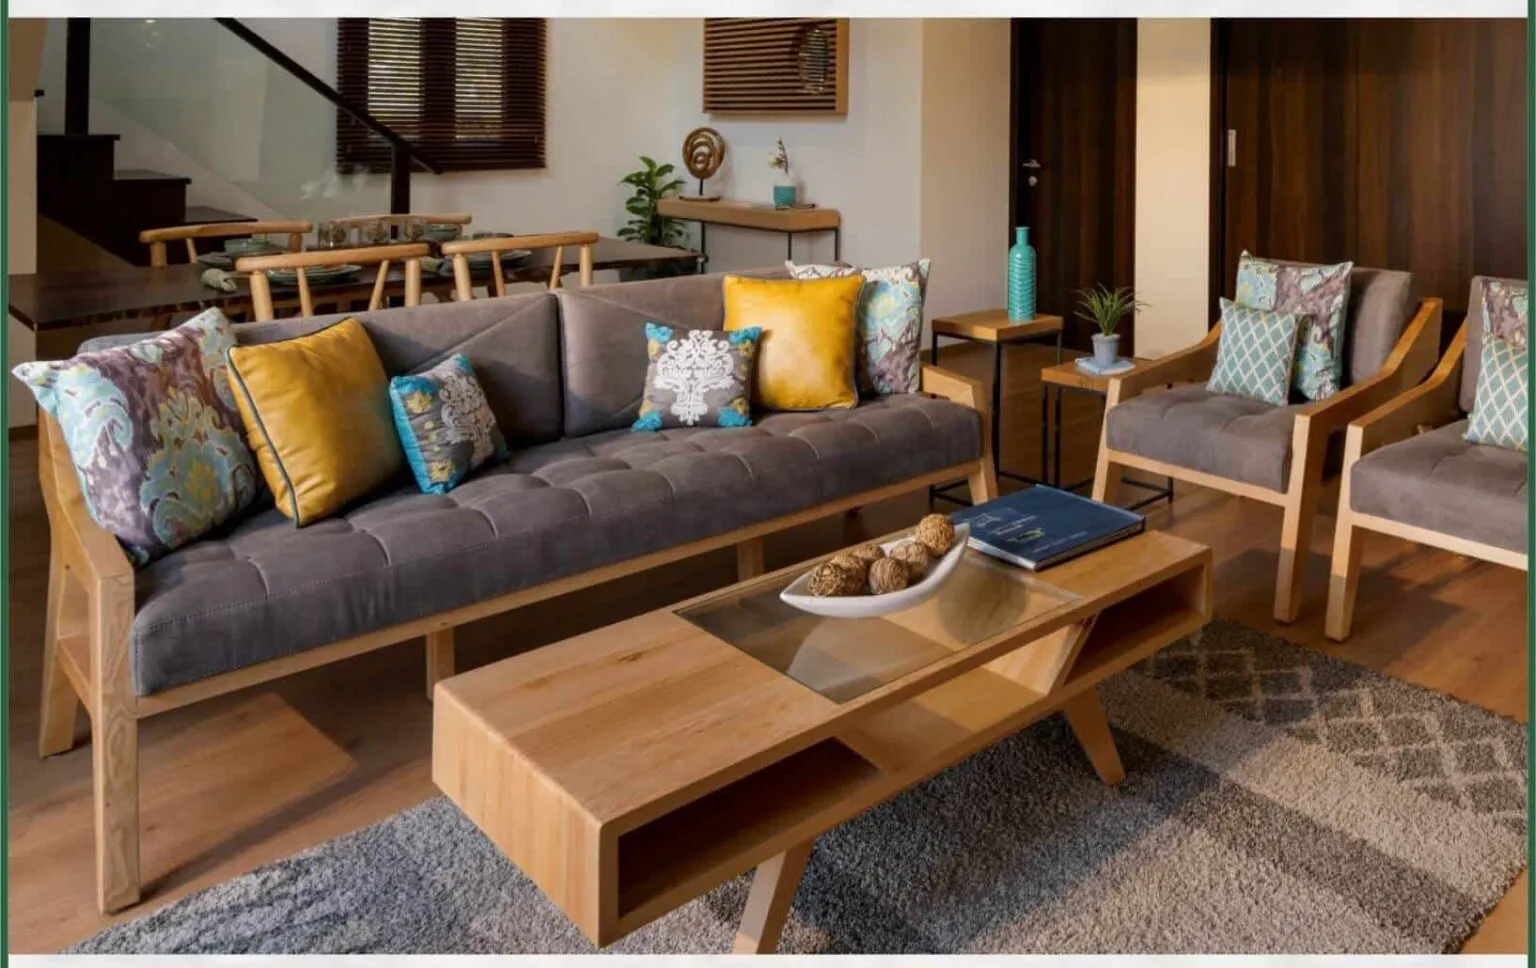 wood furniture in living room